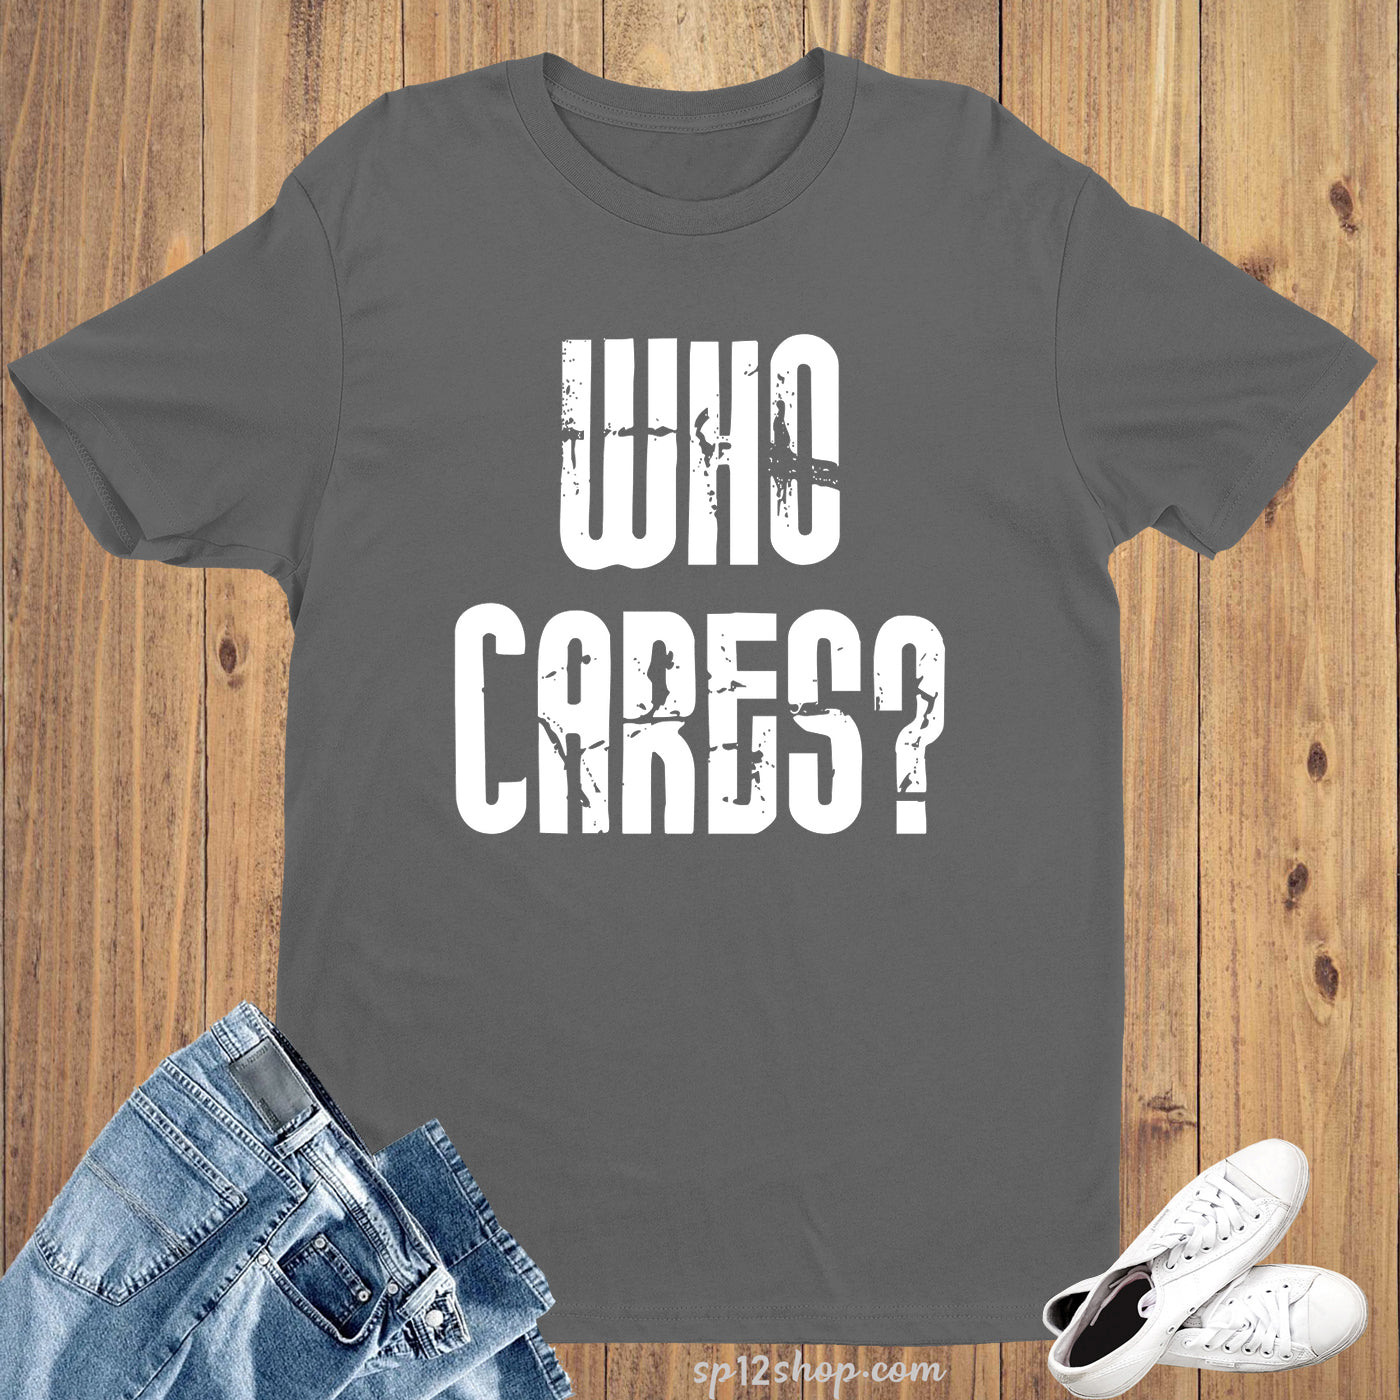 Who Cares Humorous Sarcasm Joke Witty Slogan T Shirt